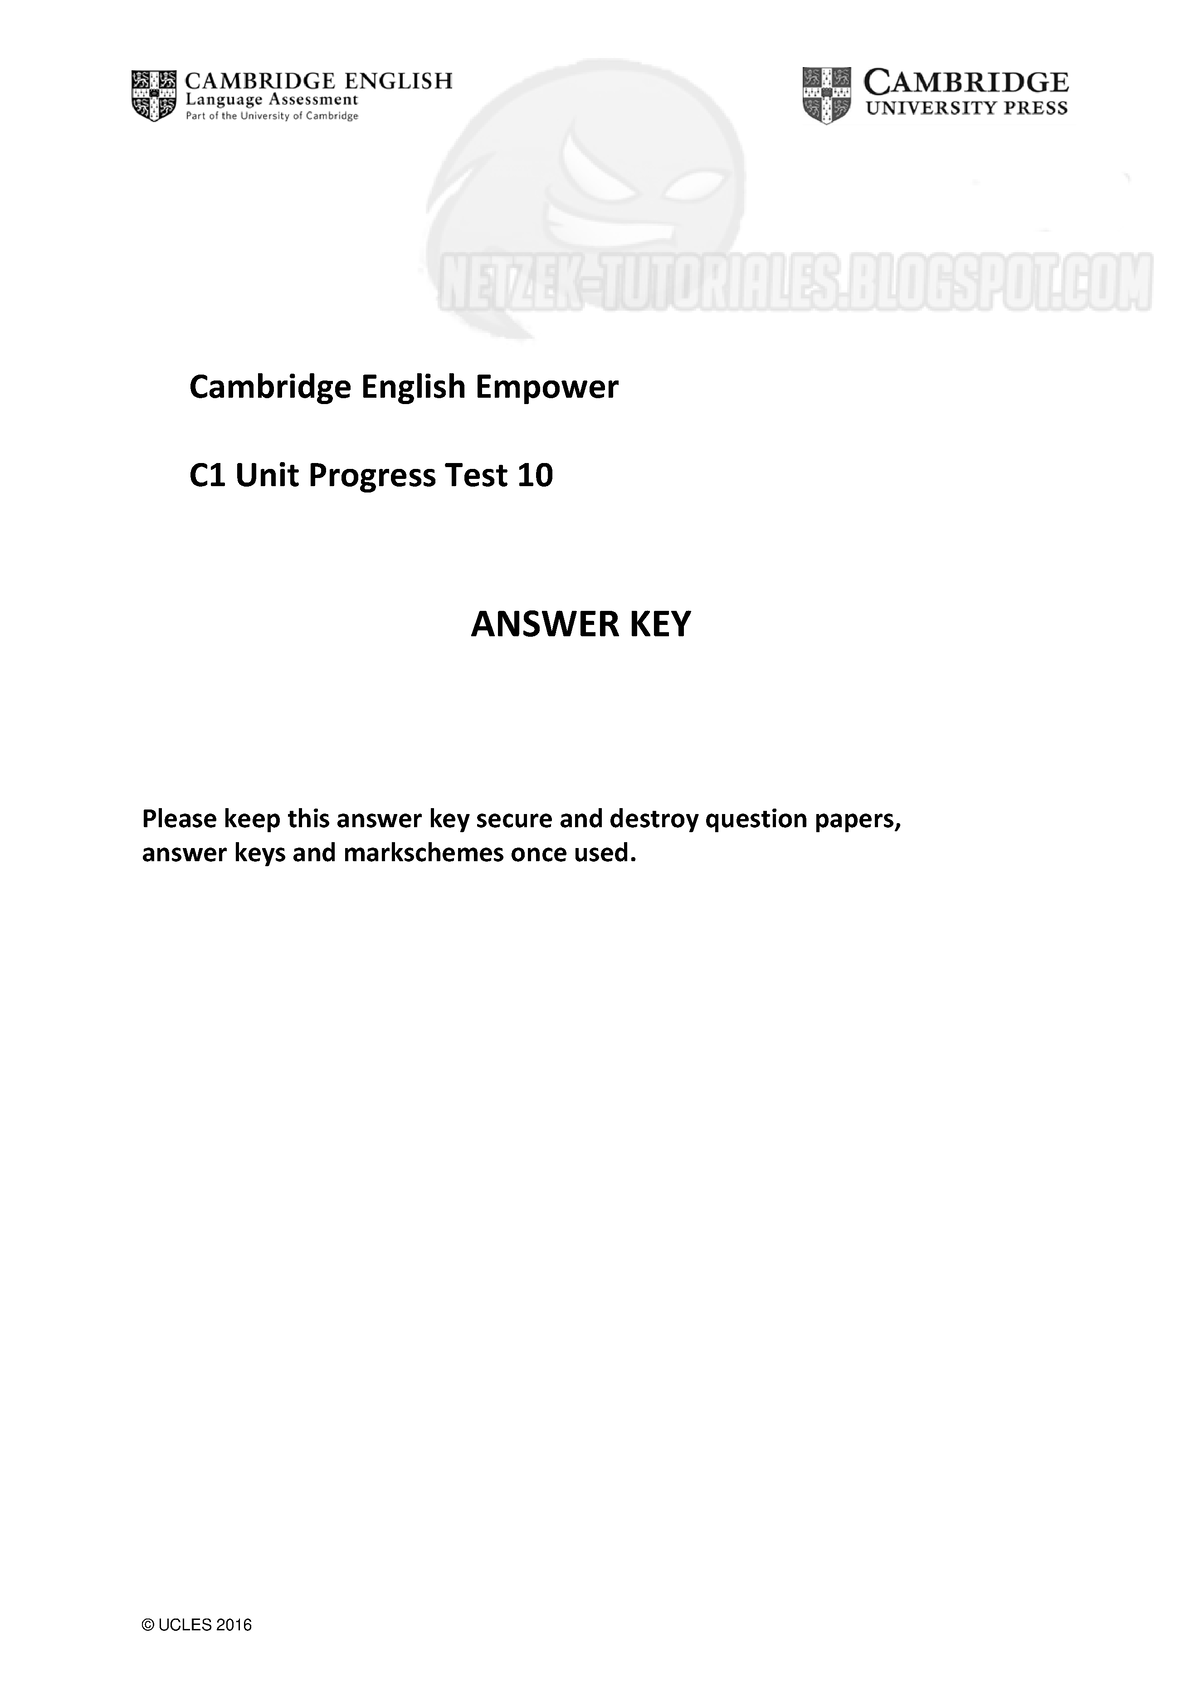 Unit 10 Progress Test Answer Key Cambridge English Empower C1 Unit 